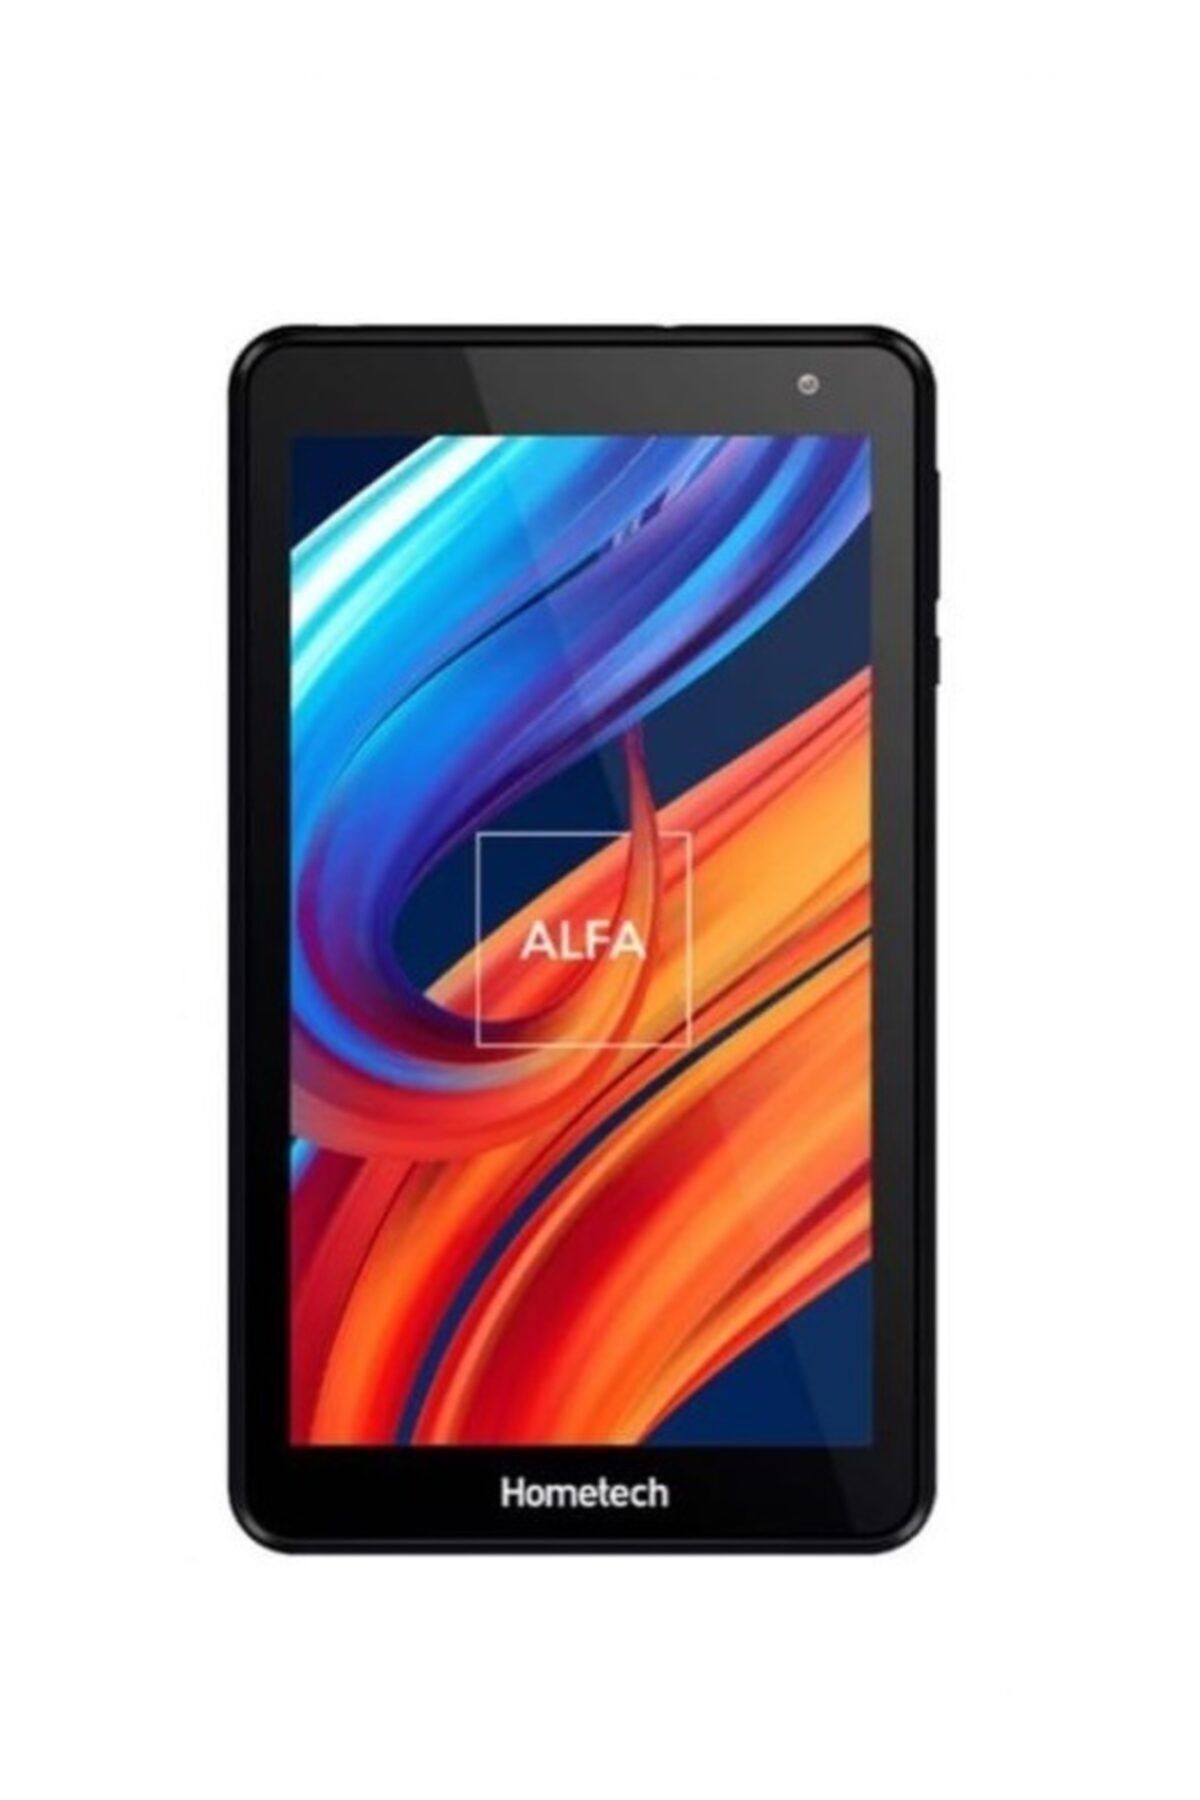 Hometech Alfa 7ra 7 Inç Tablet 1gb 16gb Siyah